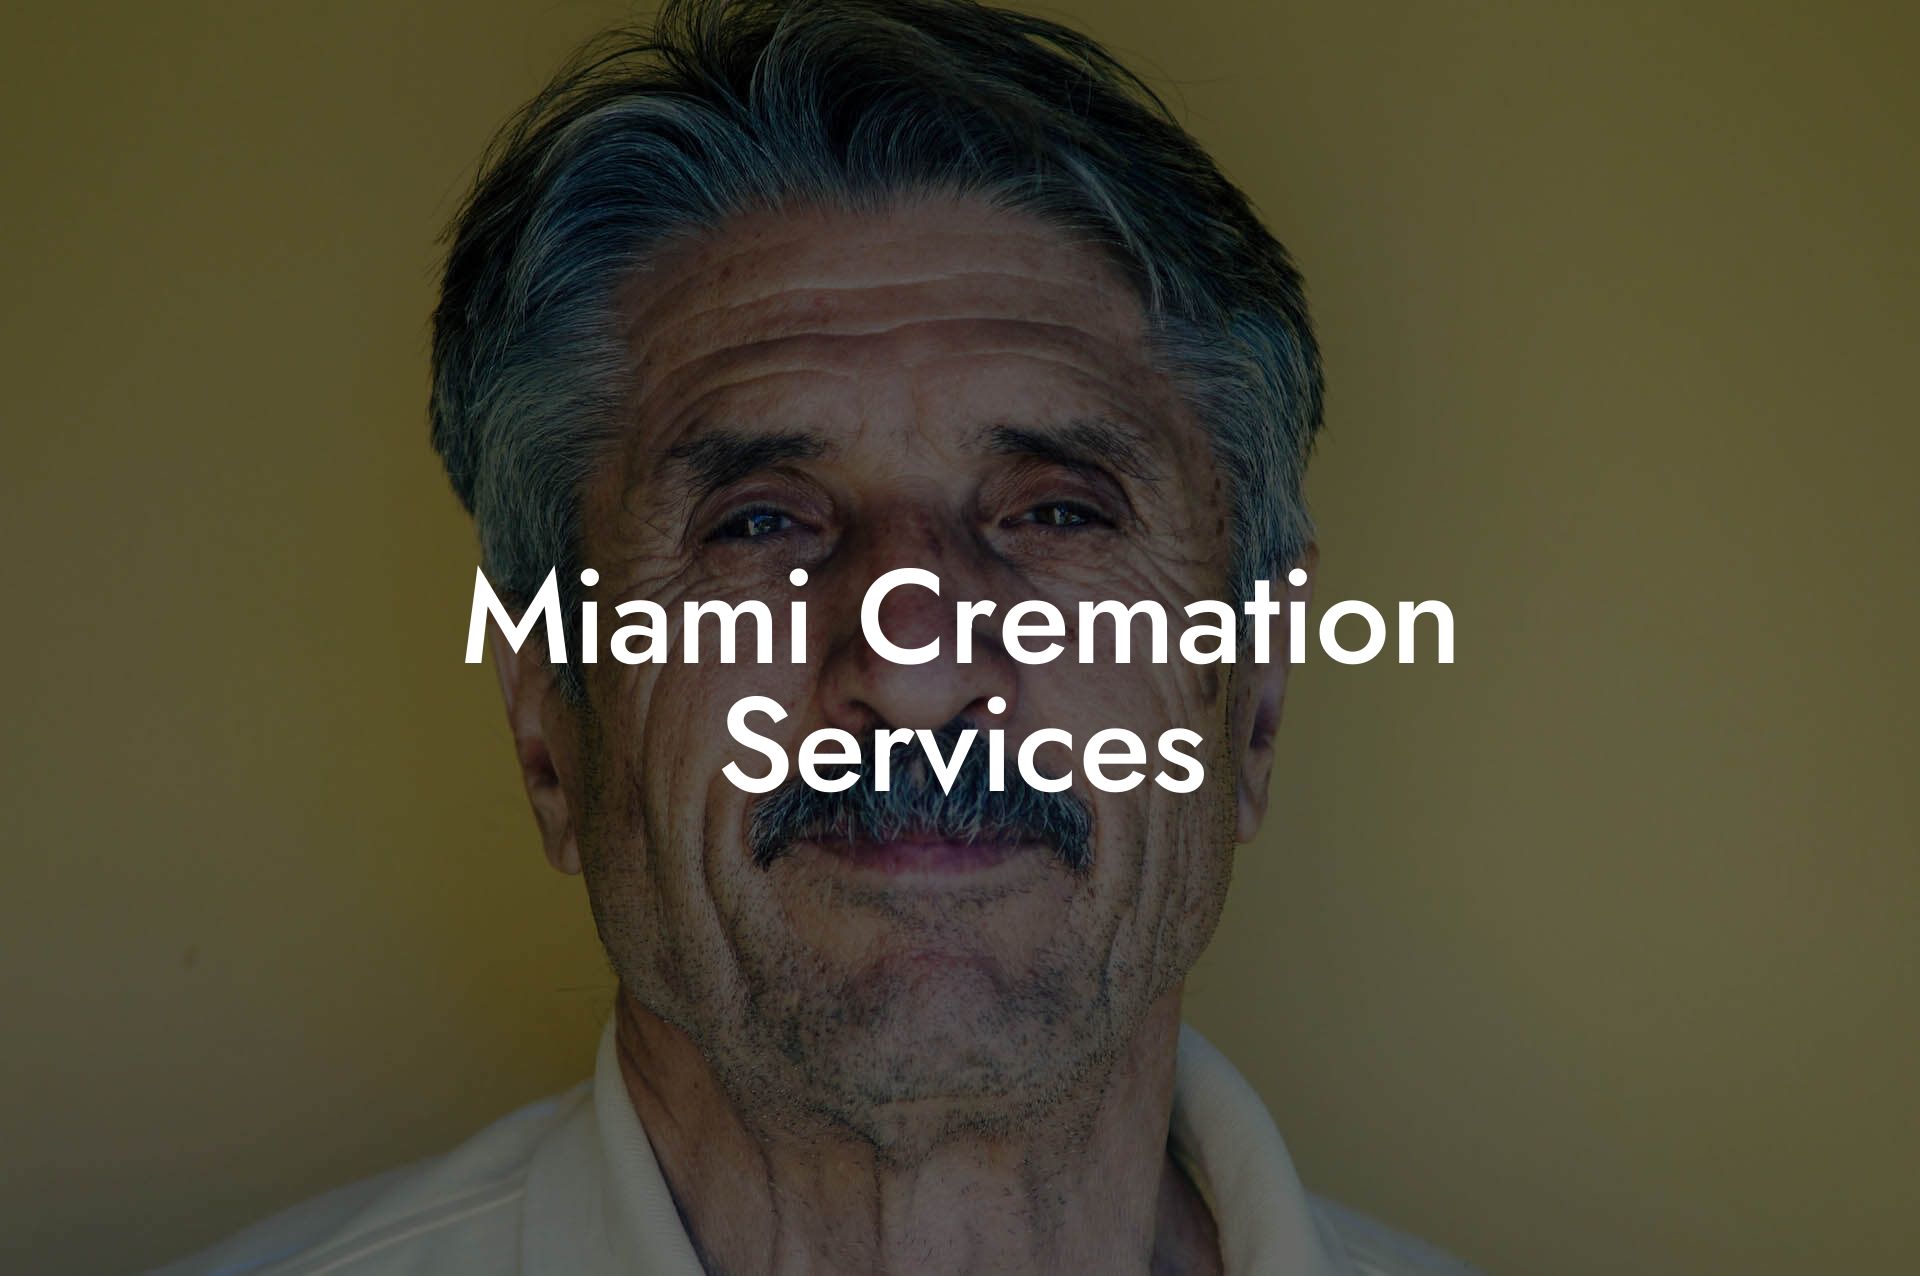 Miami Cremation Services